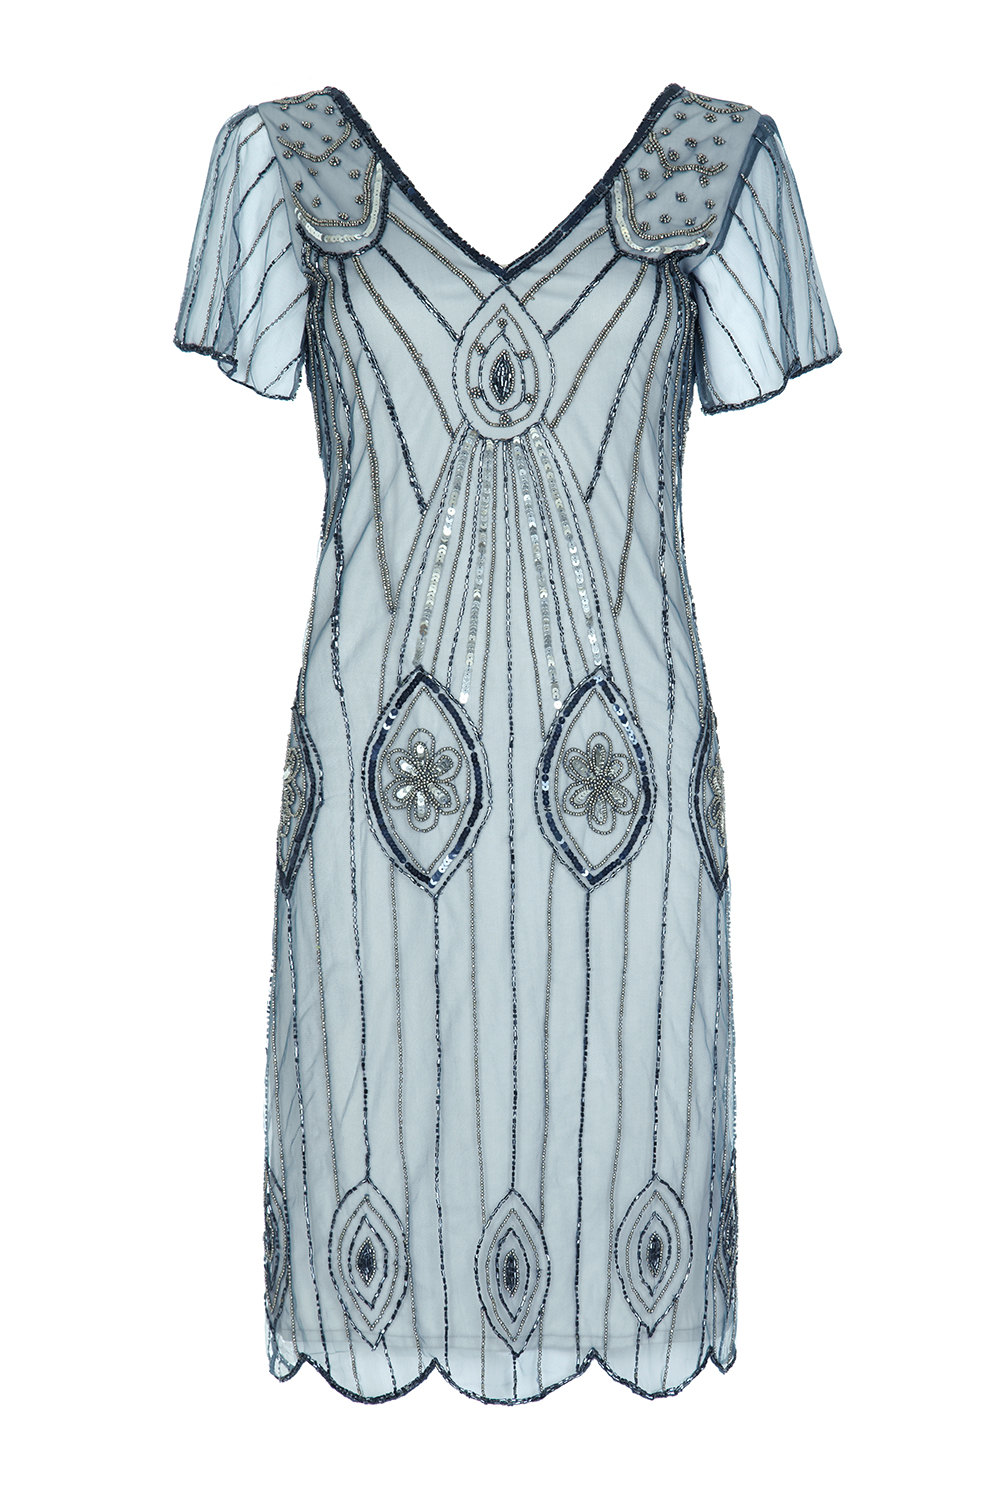 Art Deco Bridesmaid Dresses - Blue Grey Flapper Dress from Gatsby Lady on Etsy